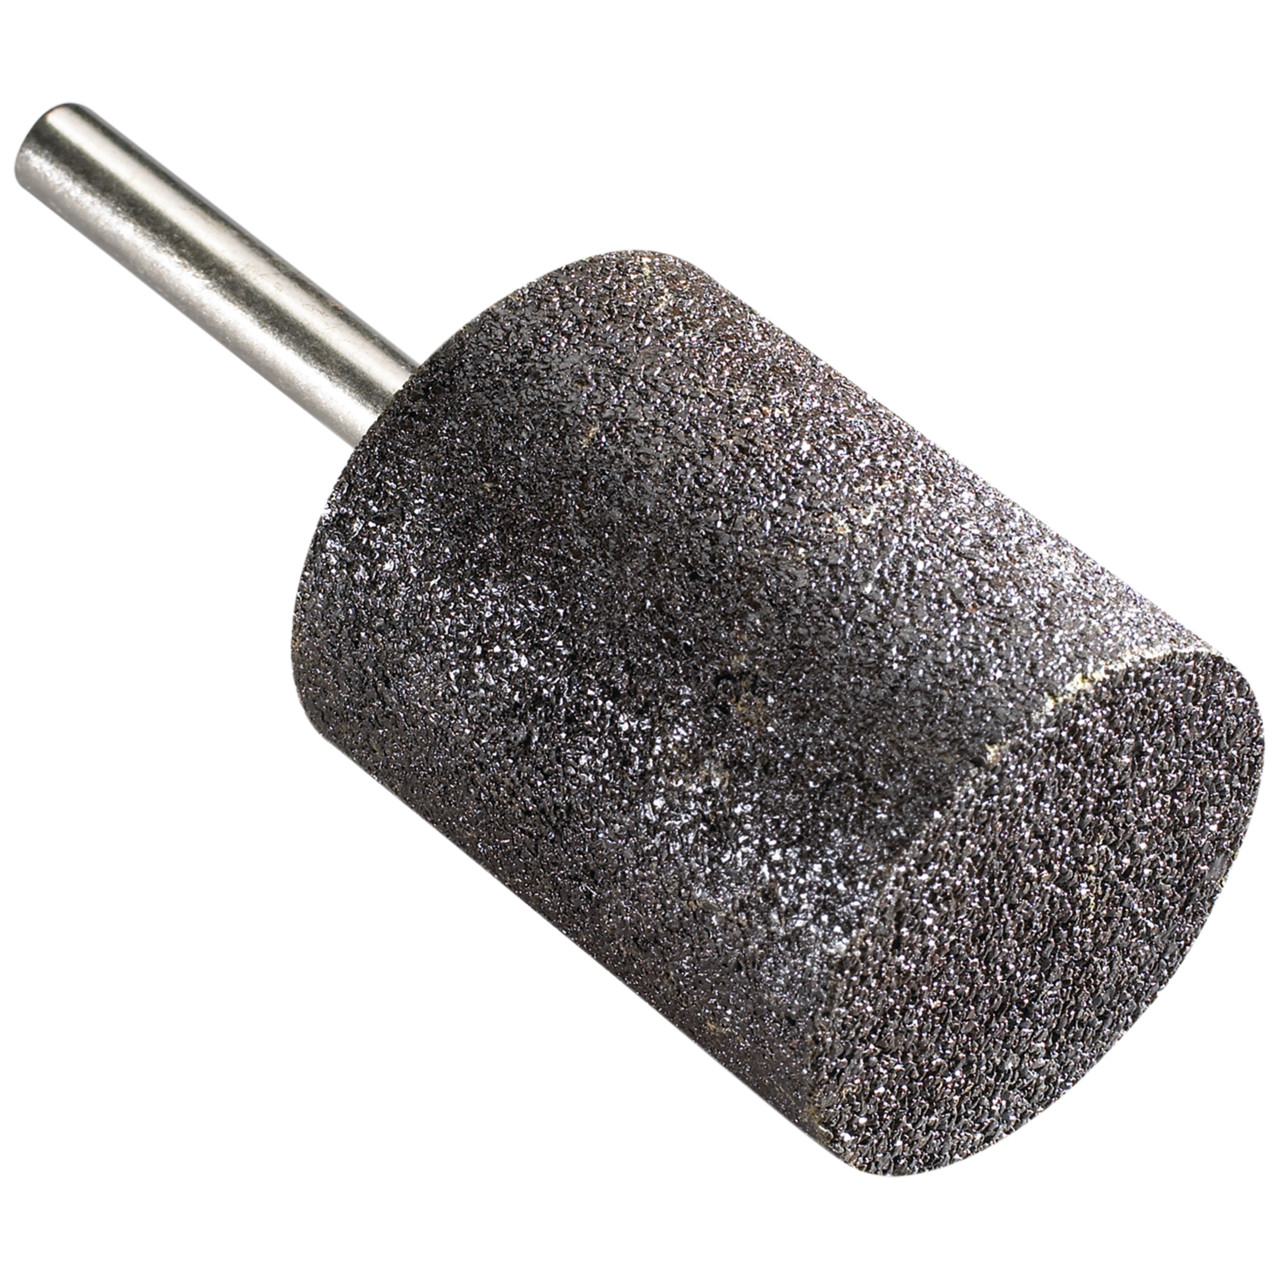 Tyrolit Punti montati in resina DxT-SxL 13x25-6x40 Per ghisa, forma: 52ZY - cilindro (punto montato), Art. 2111